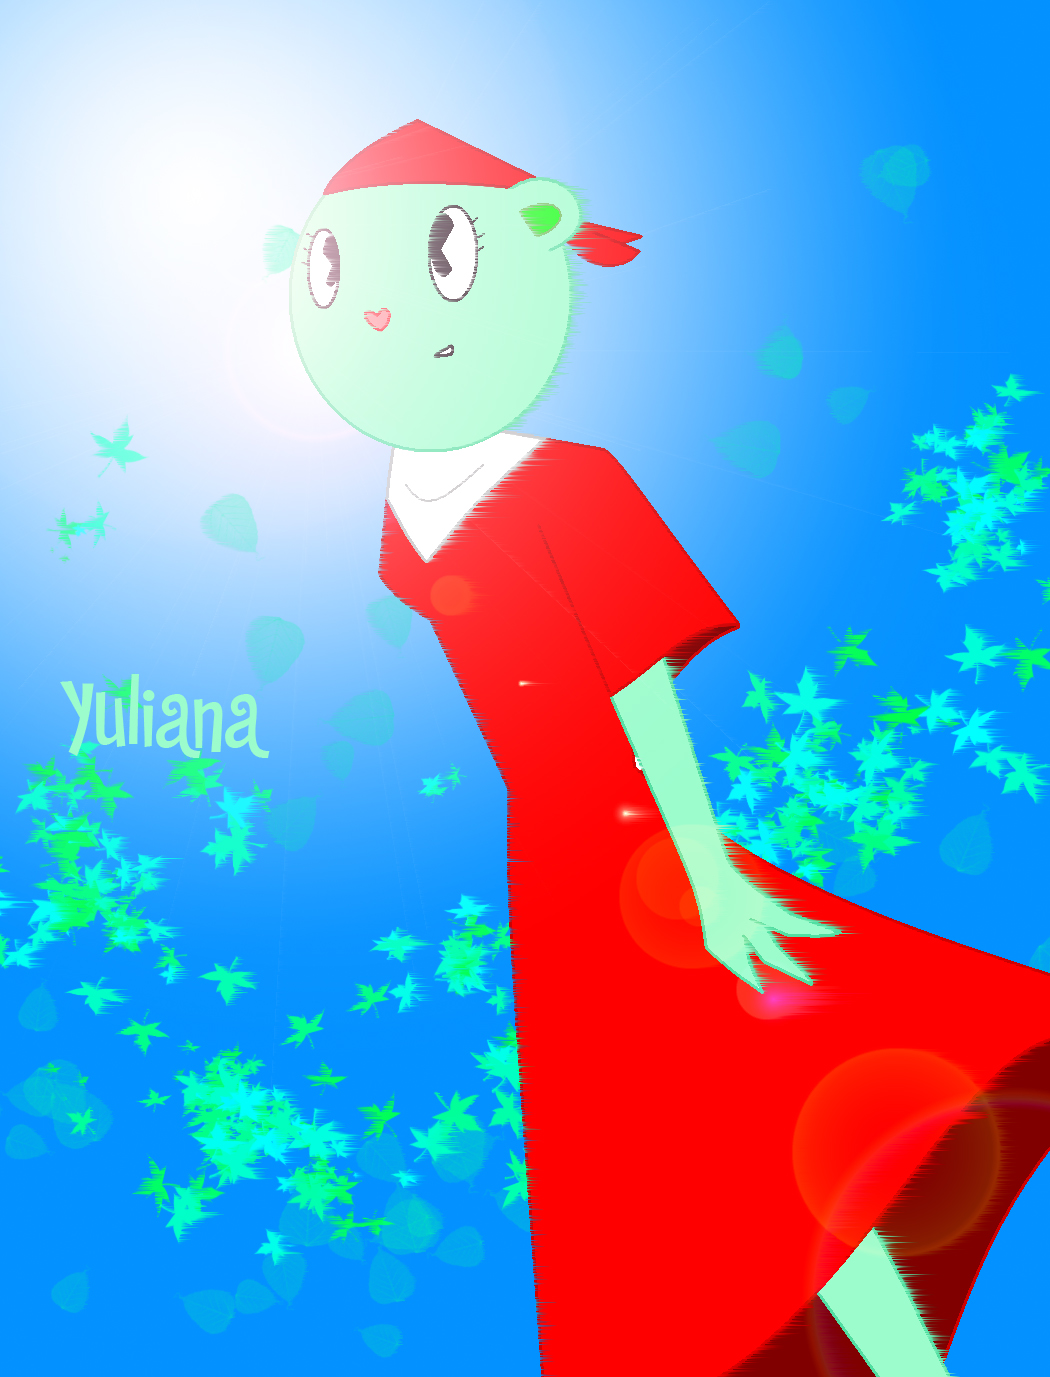 Yuliana in a Day by GavImp